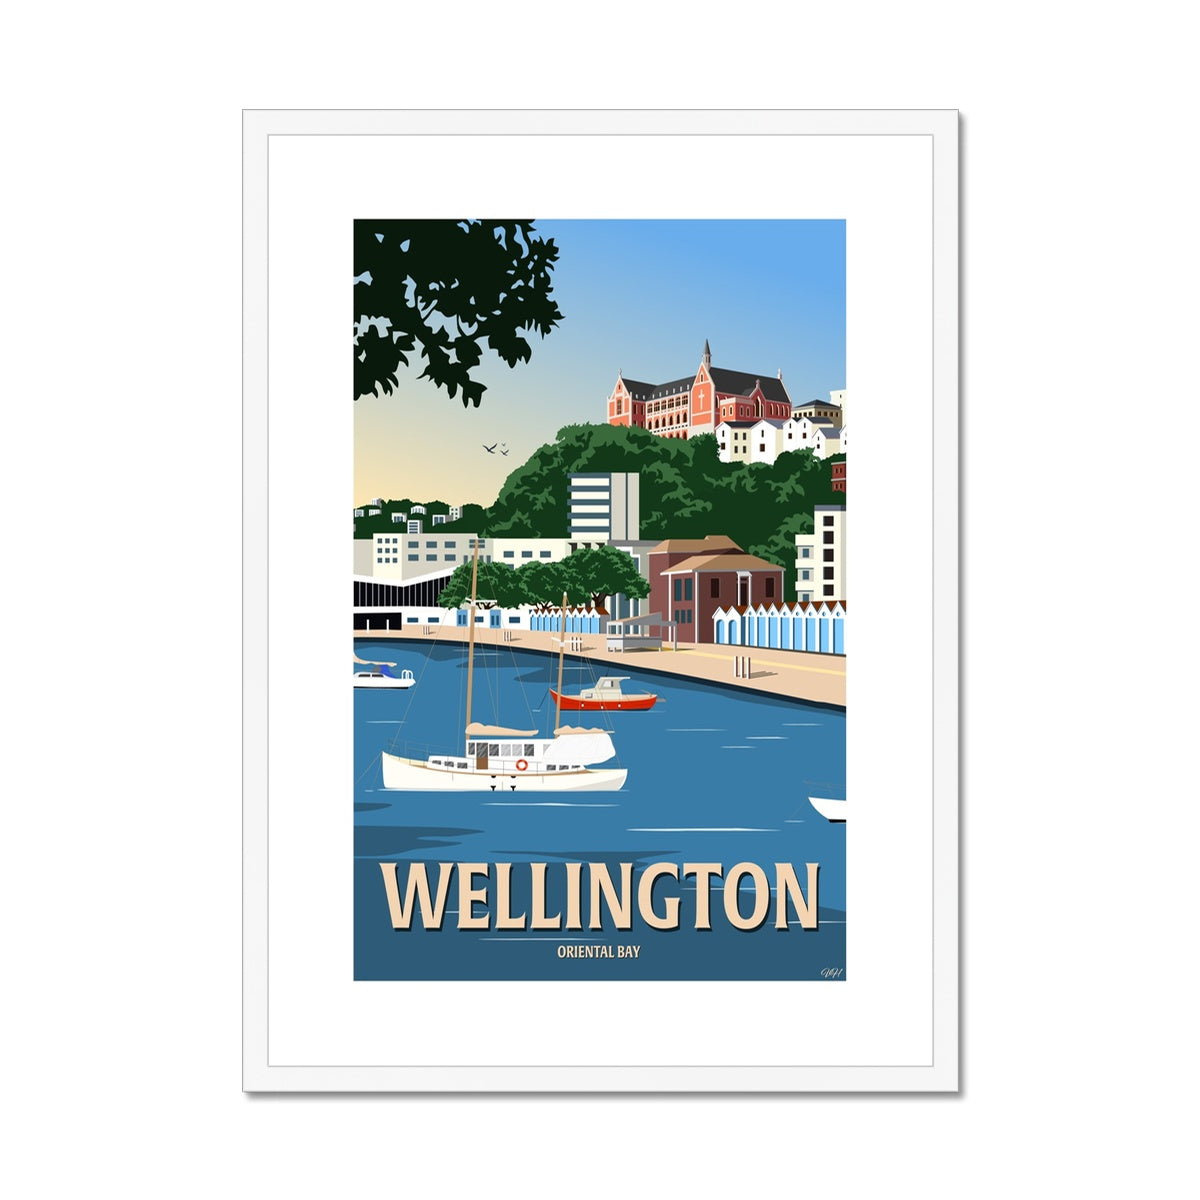 Wellington, Oriental Bay Framed & Mounted Print